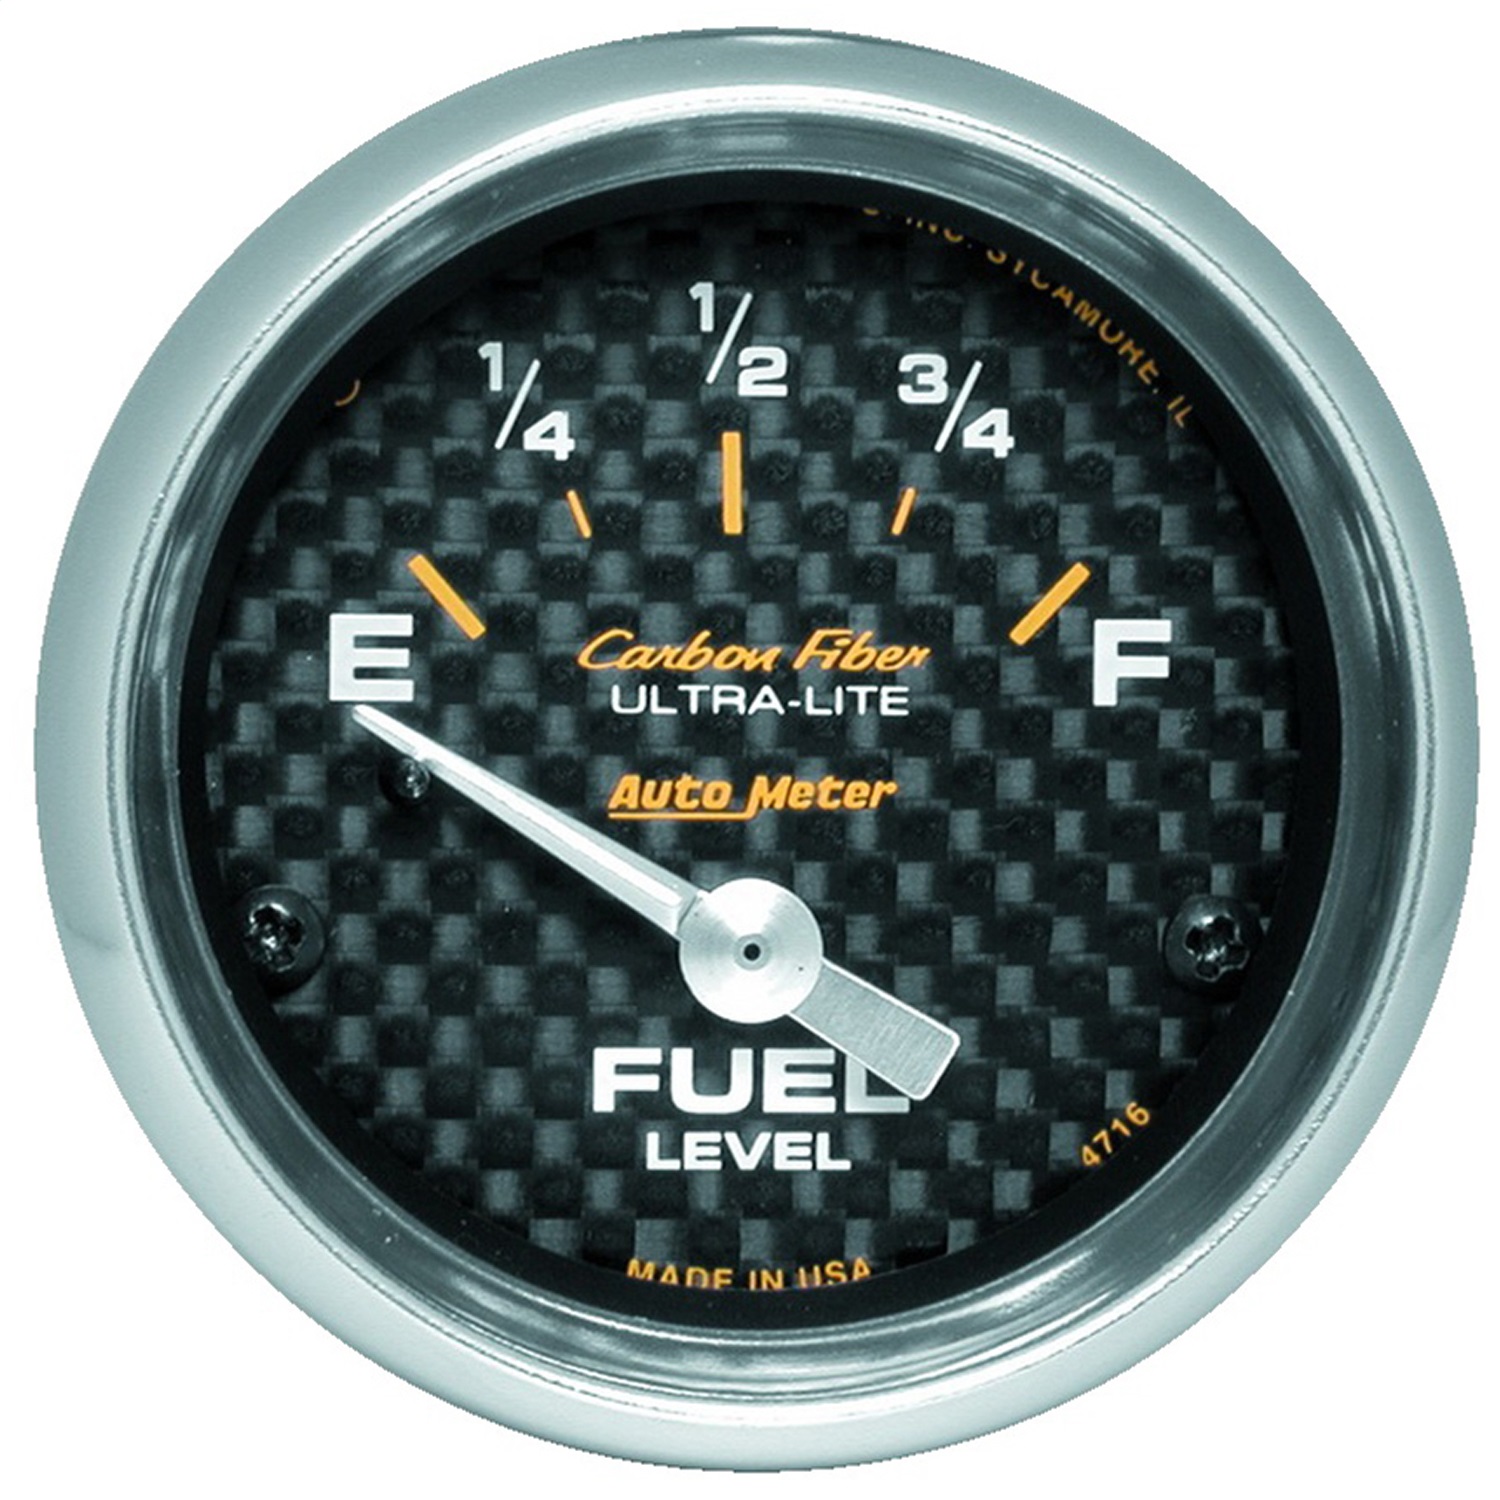 Auto Meter Auto Meter 4716 Carbon Fiber; Electric Fuel Level Gauge